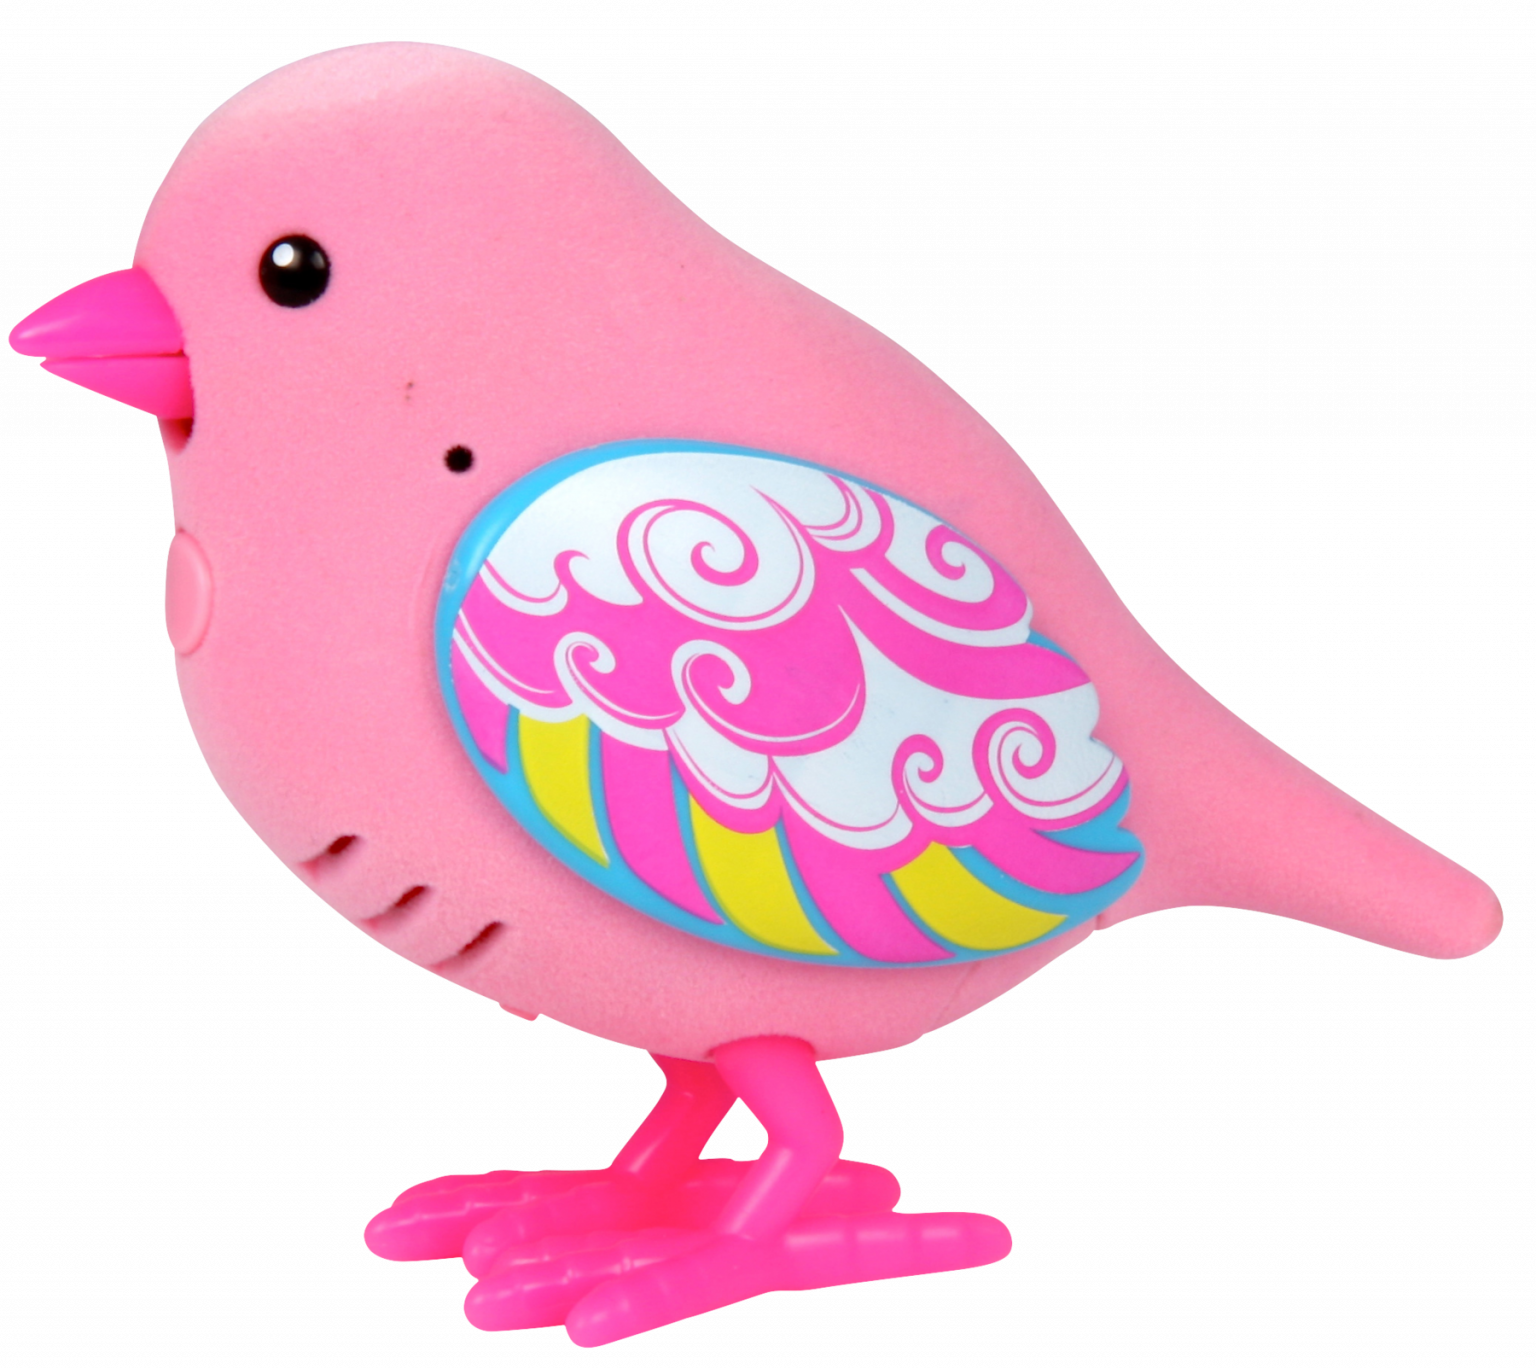 Bird цены. Little Live Pets птичка. Игрушка "птичка". Говорящая птица игрушка. Игрушка розовая птица.